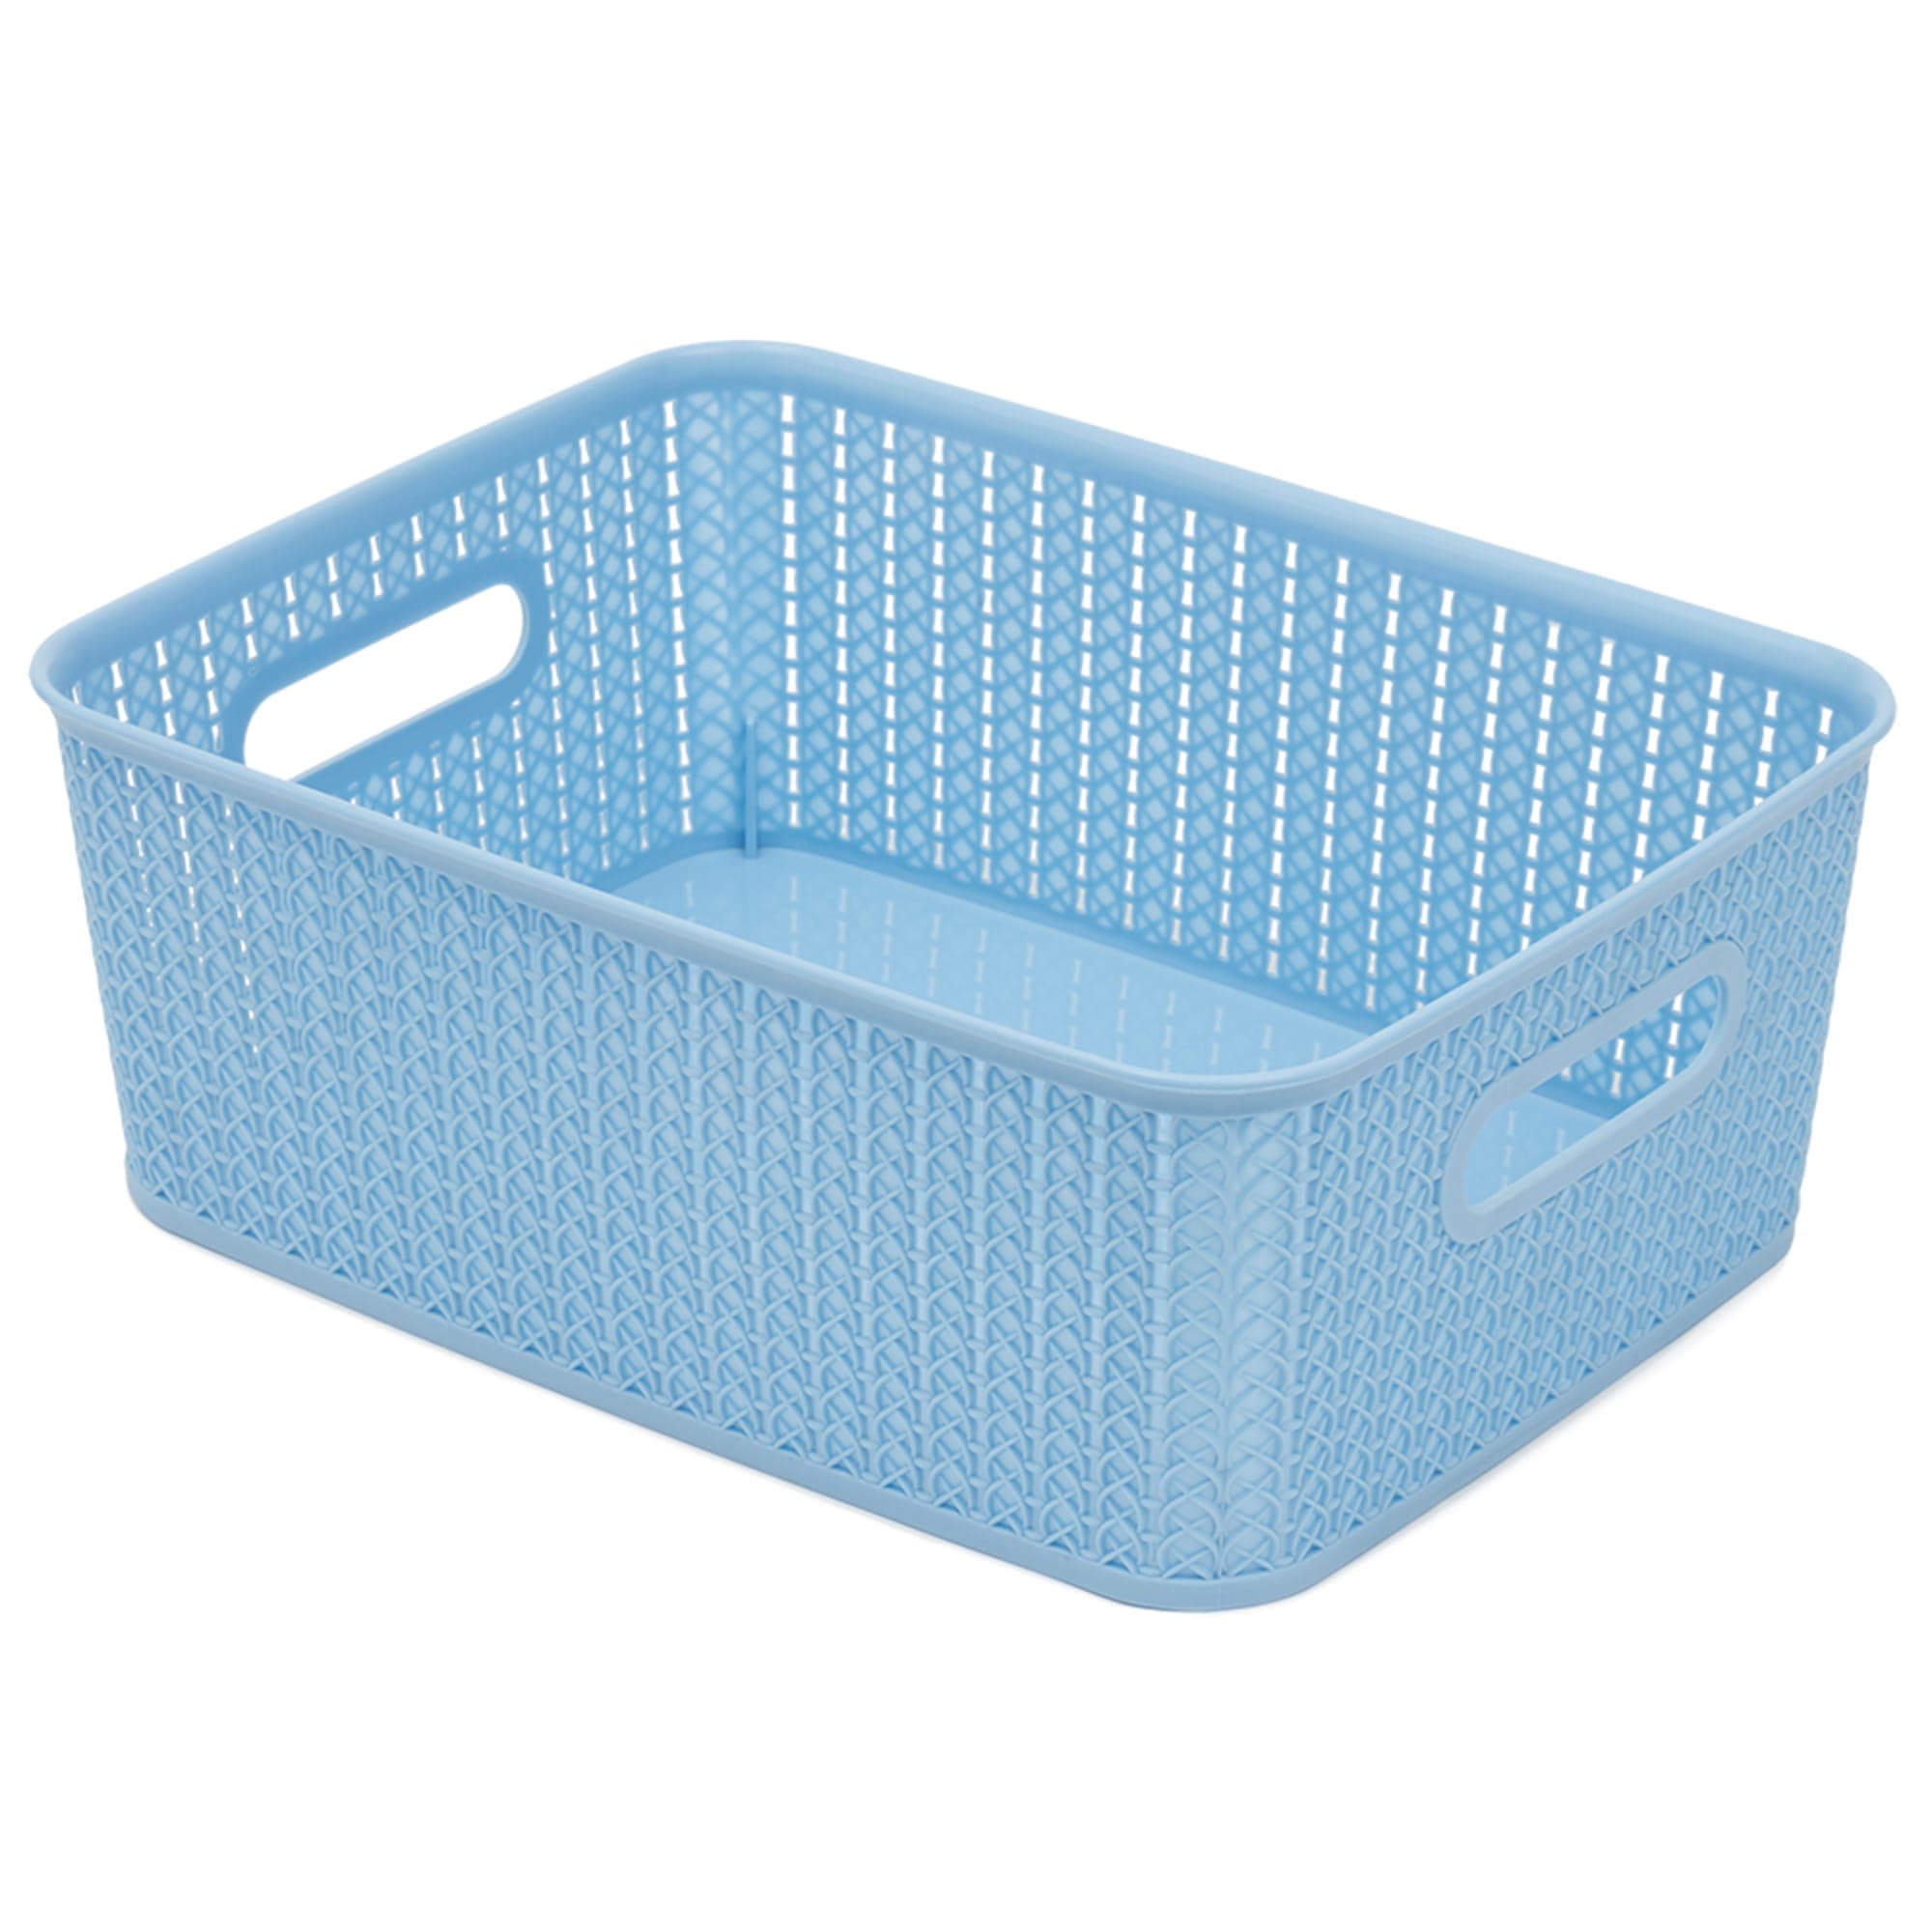 Home Basics 12.5 Liter Plastic Basket With Handles, Blue $5 EACH, CASE PACK OF 6